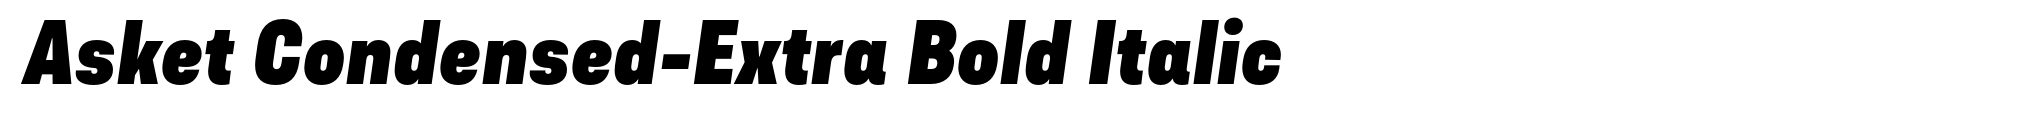 Asket Condensed-Extra Bold Italic image